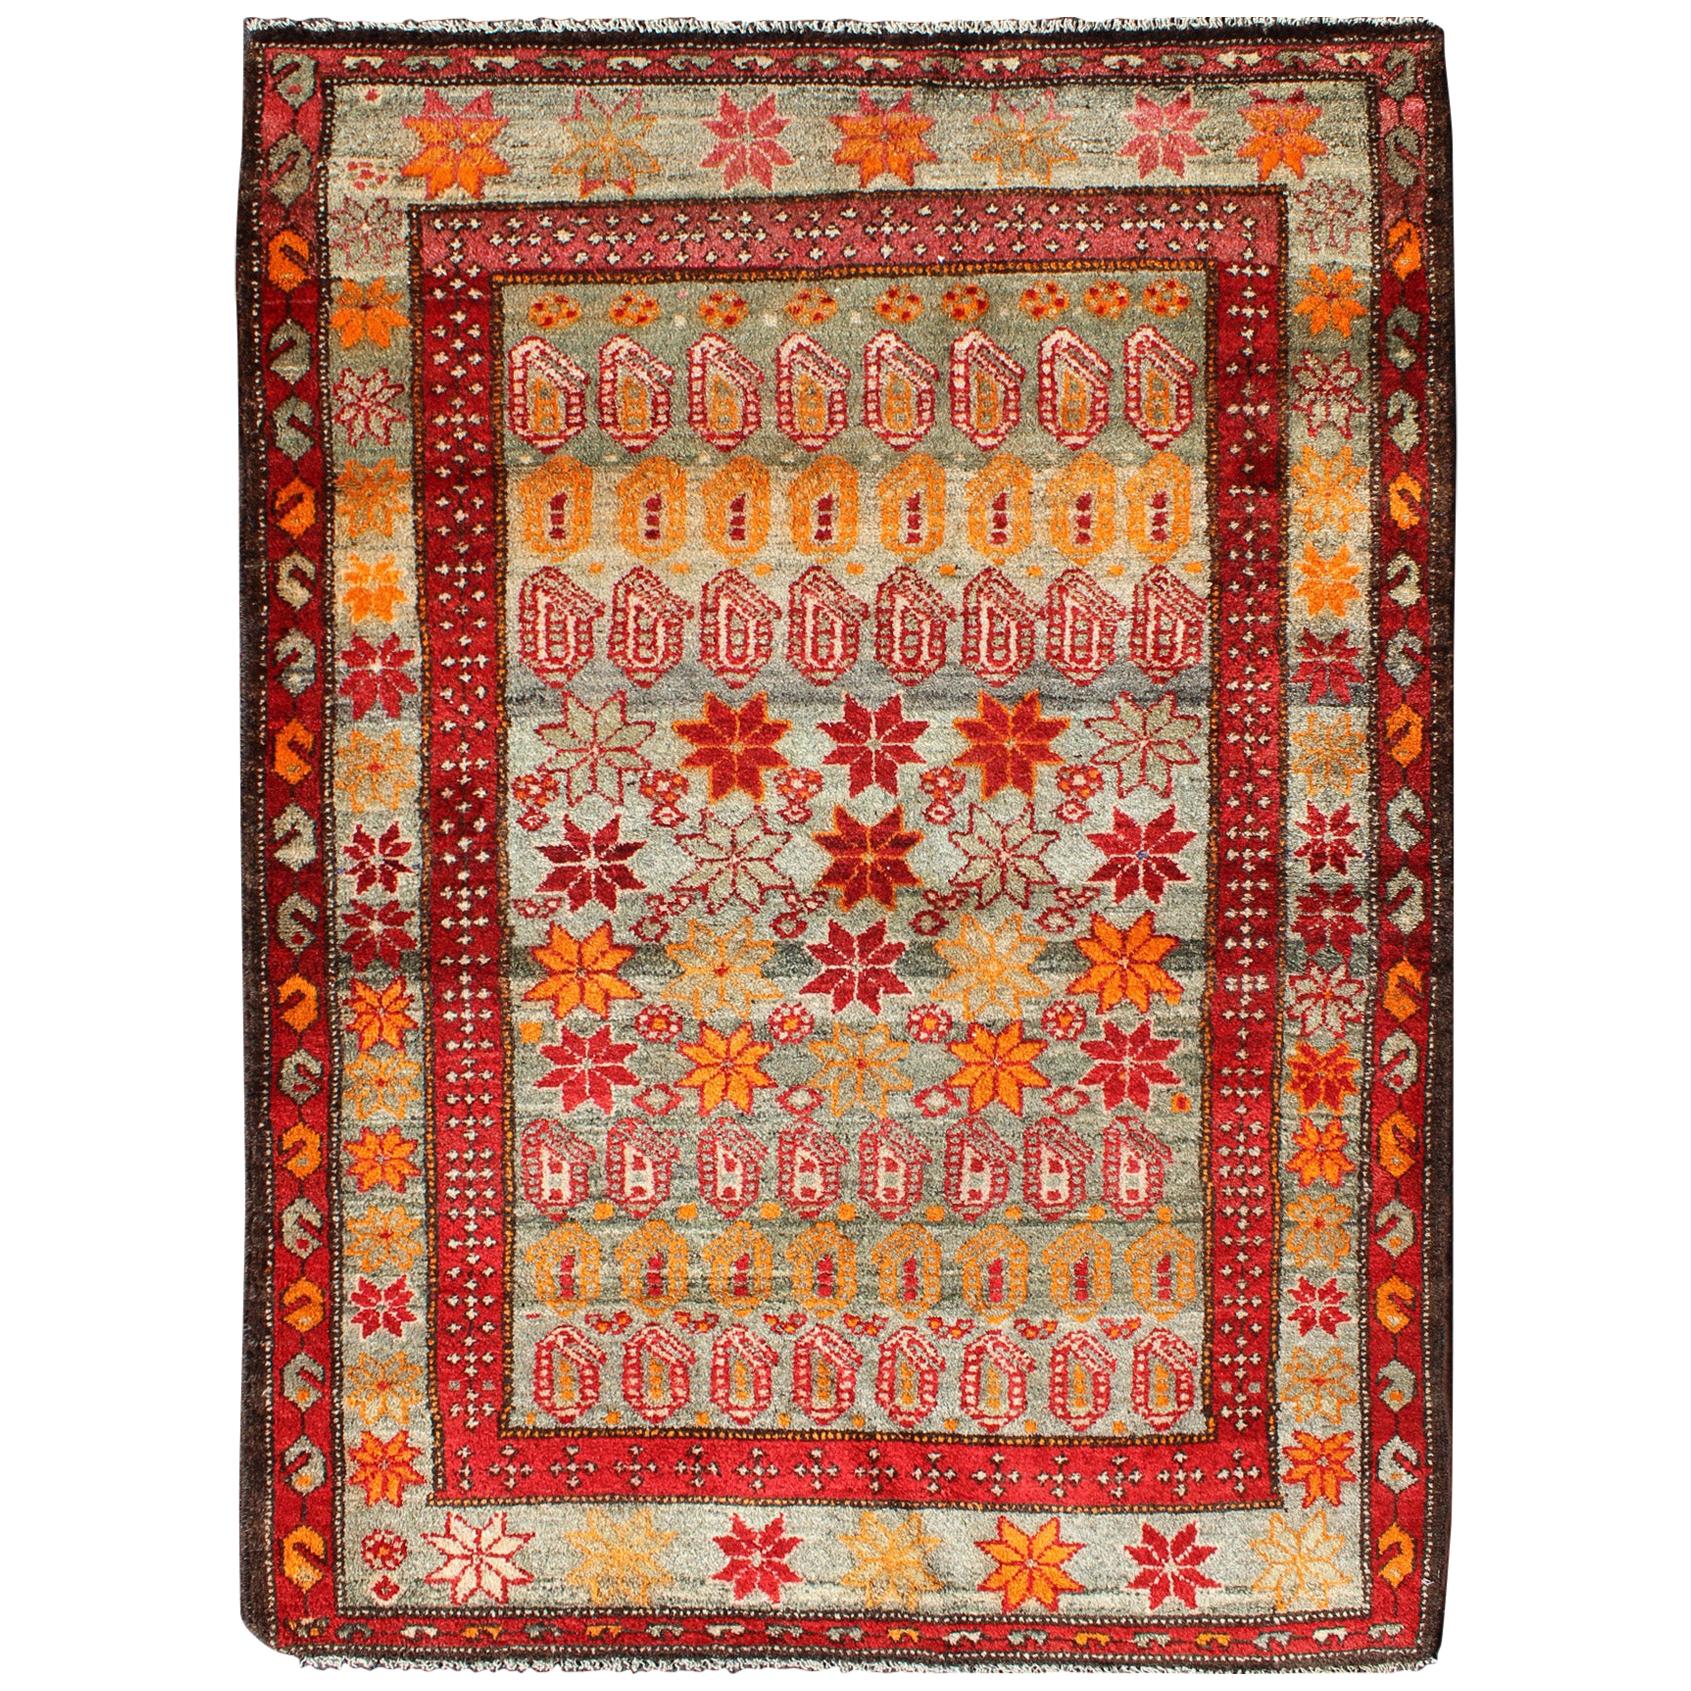 Colorful Vintage Persian Hamedan Rug with All-Over Motif Design